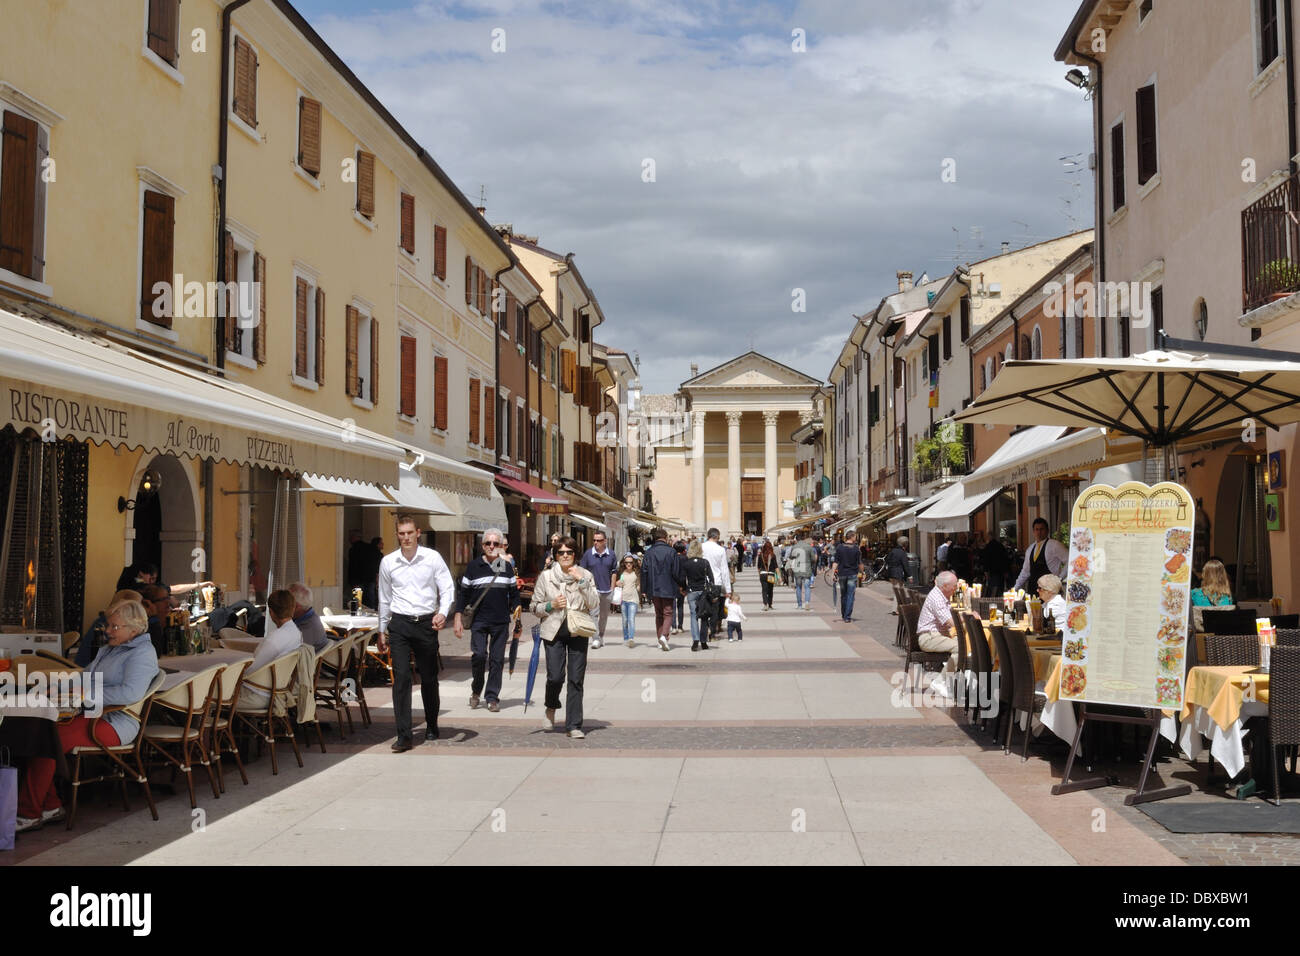 Restaurants line both sides of Piazza Giacomo Matteotti in Bardolino, on Lake Garda. Stock Photo